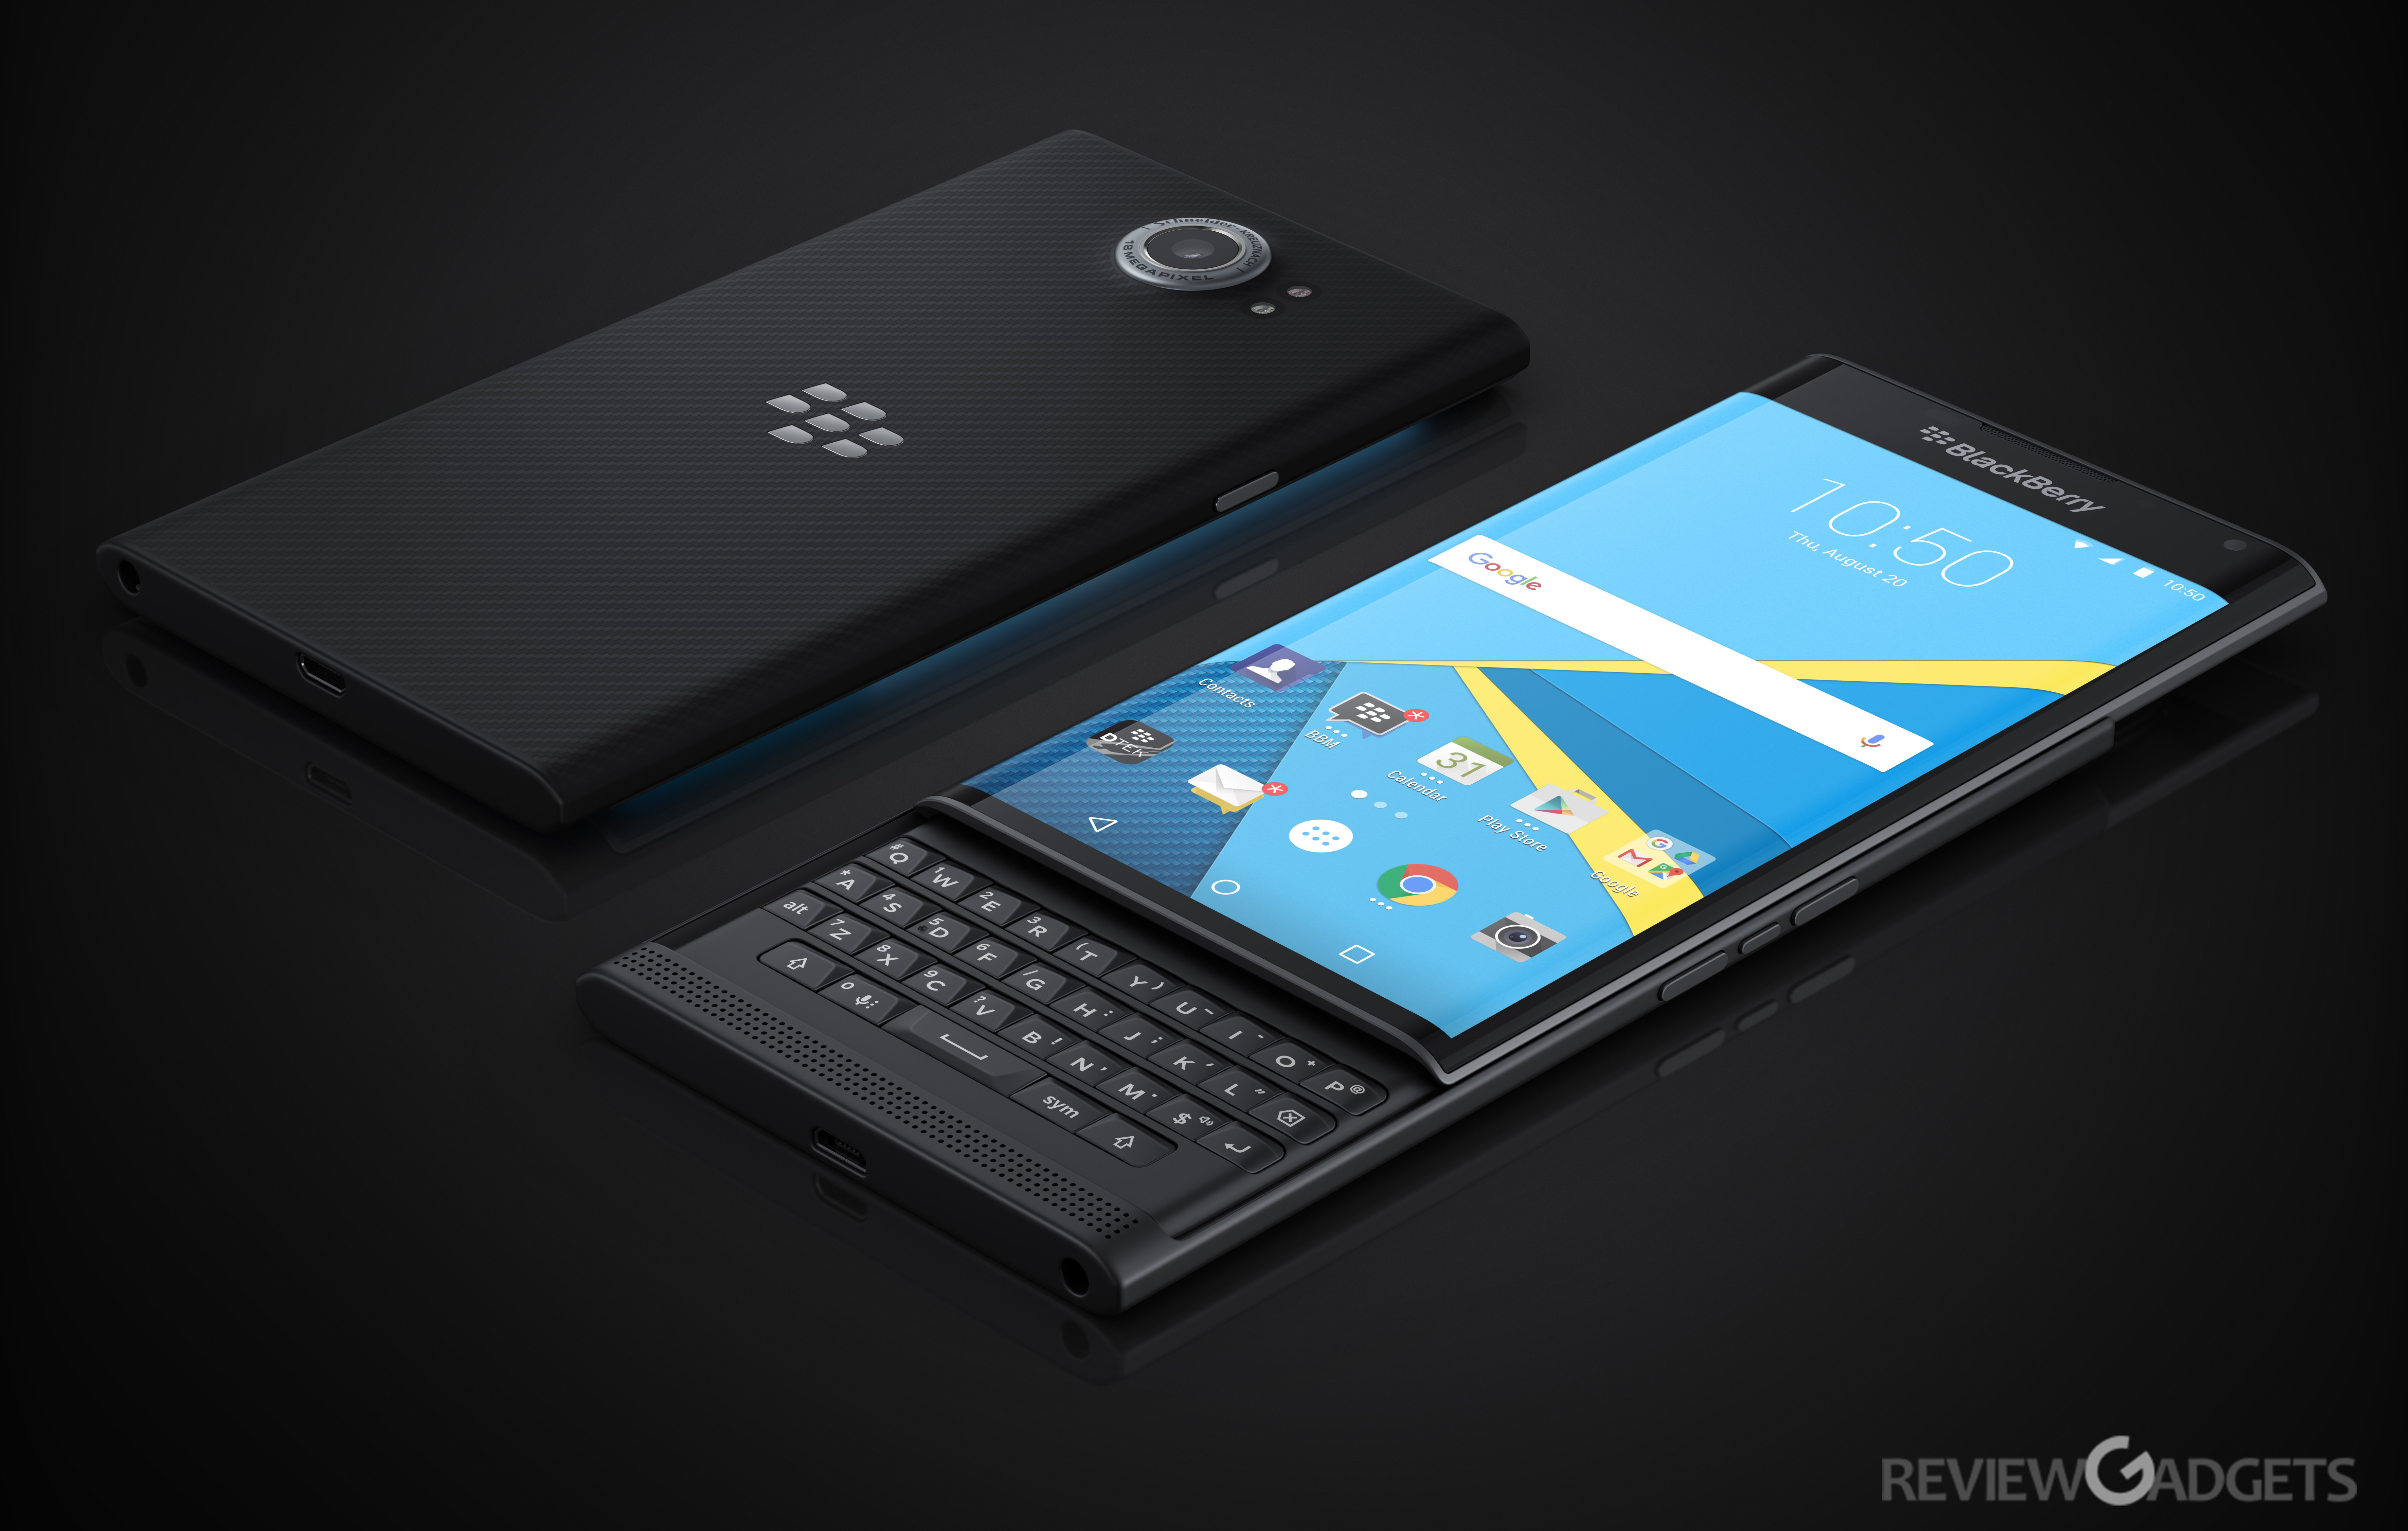 Blackberry android handset